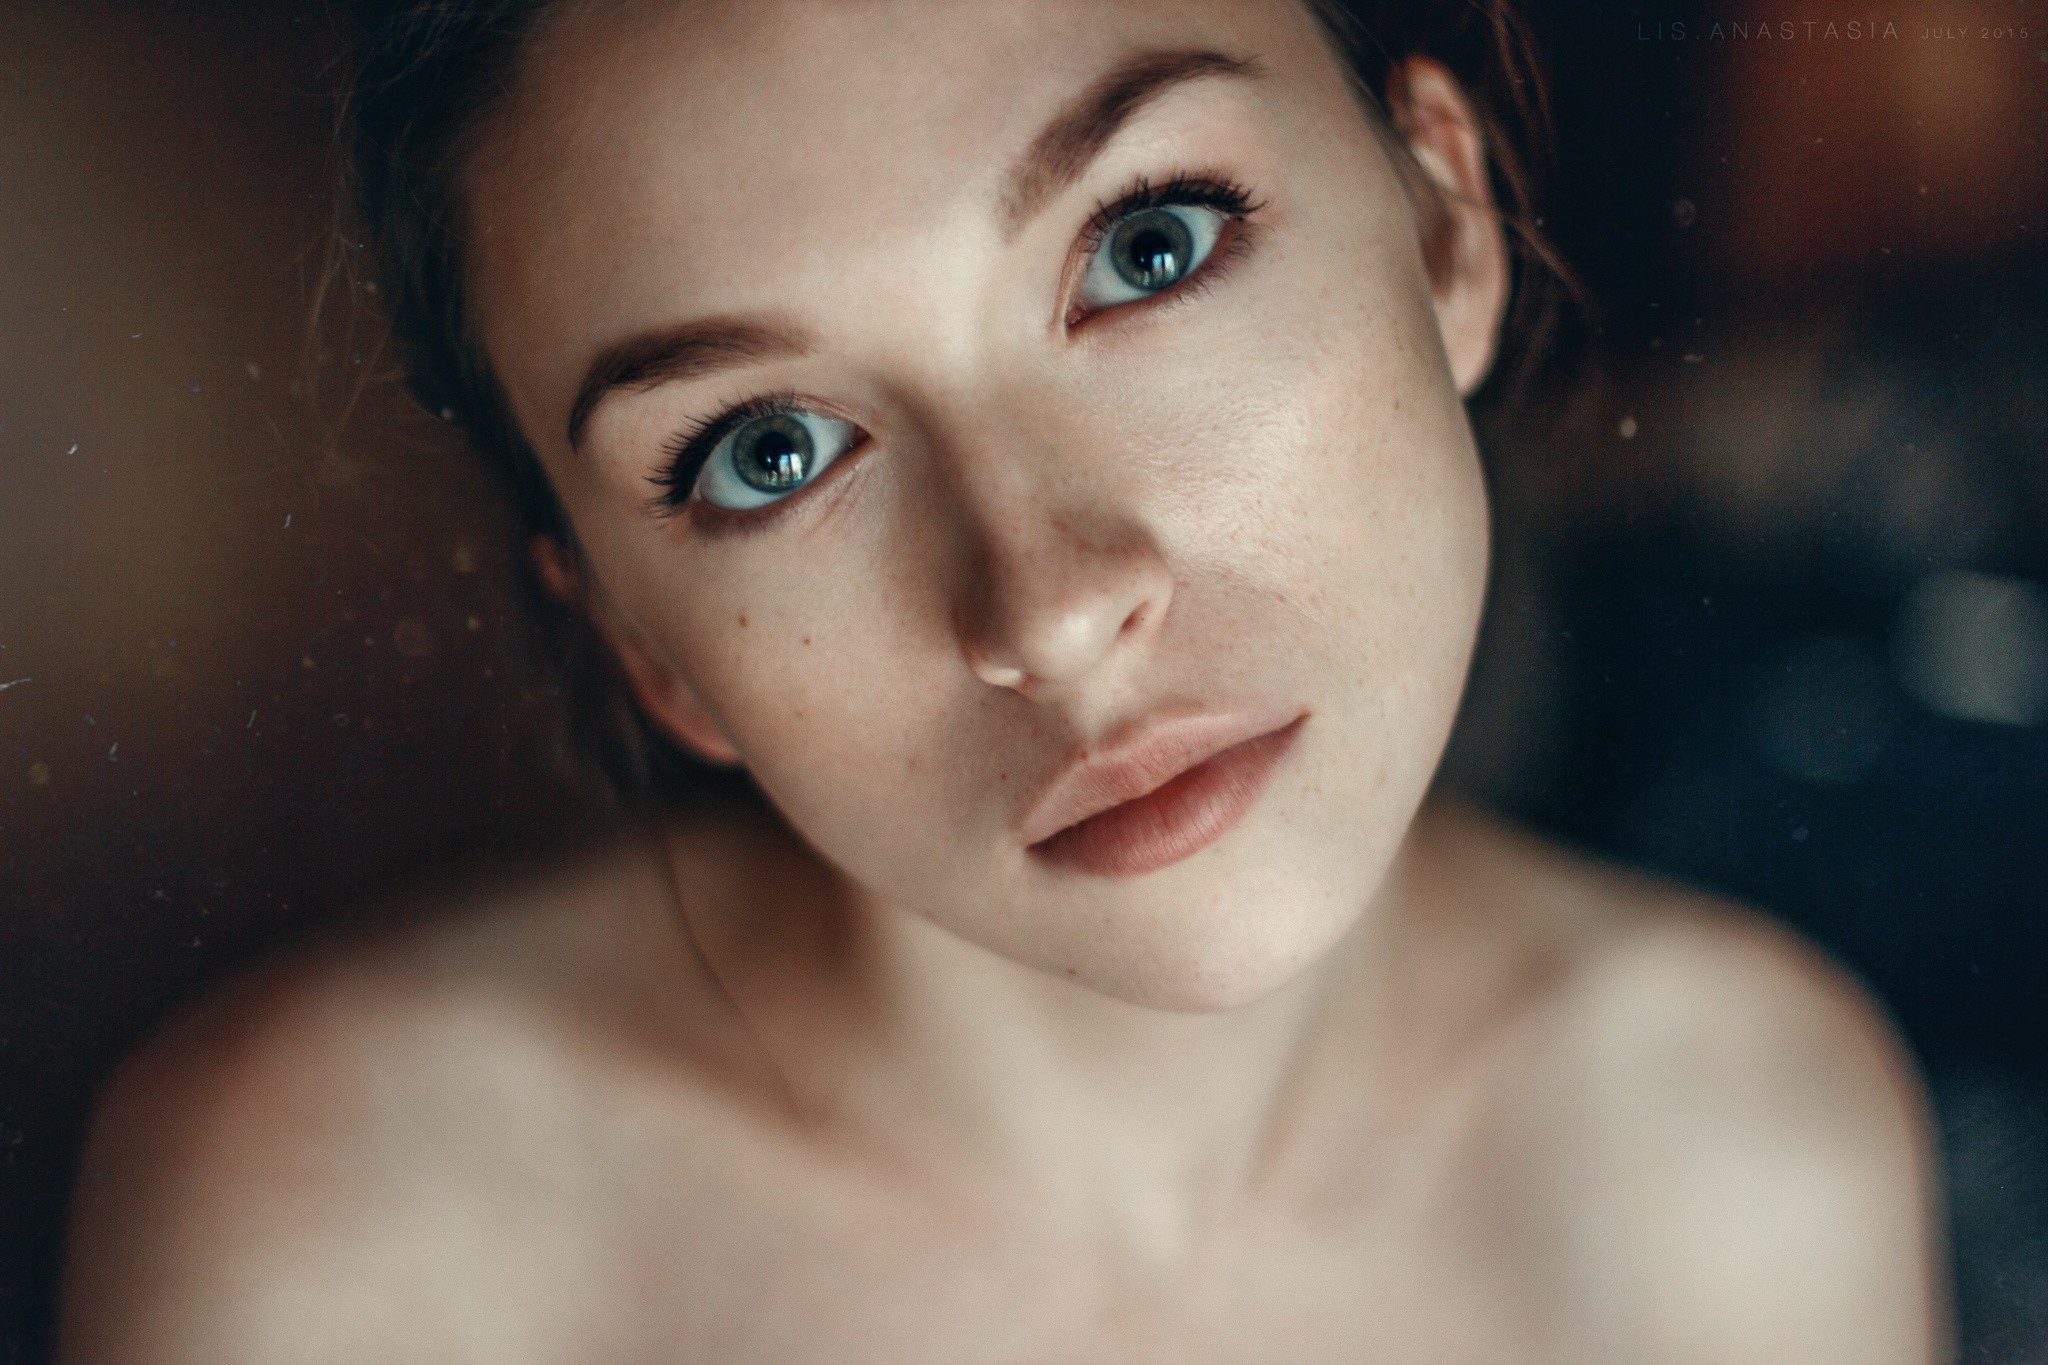 People 2048x1365 women model brunette blue eyes freckles face bare shoulders portrait looking at viewer closeup women indoors 2015 (Year) implied nude Anastasia Lis